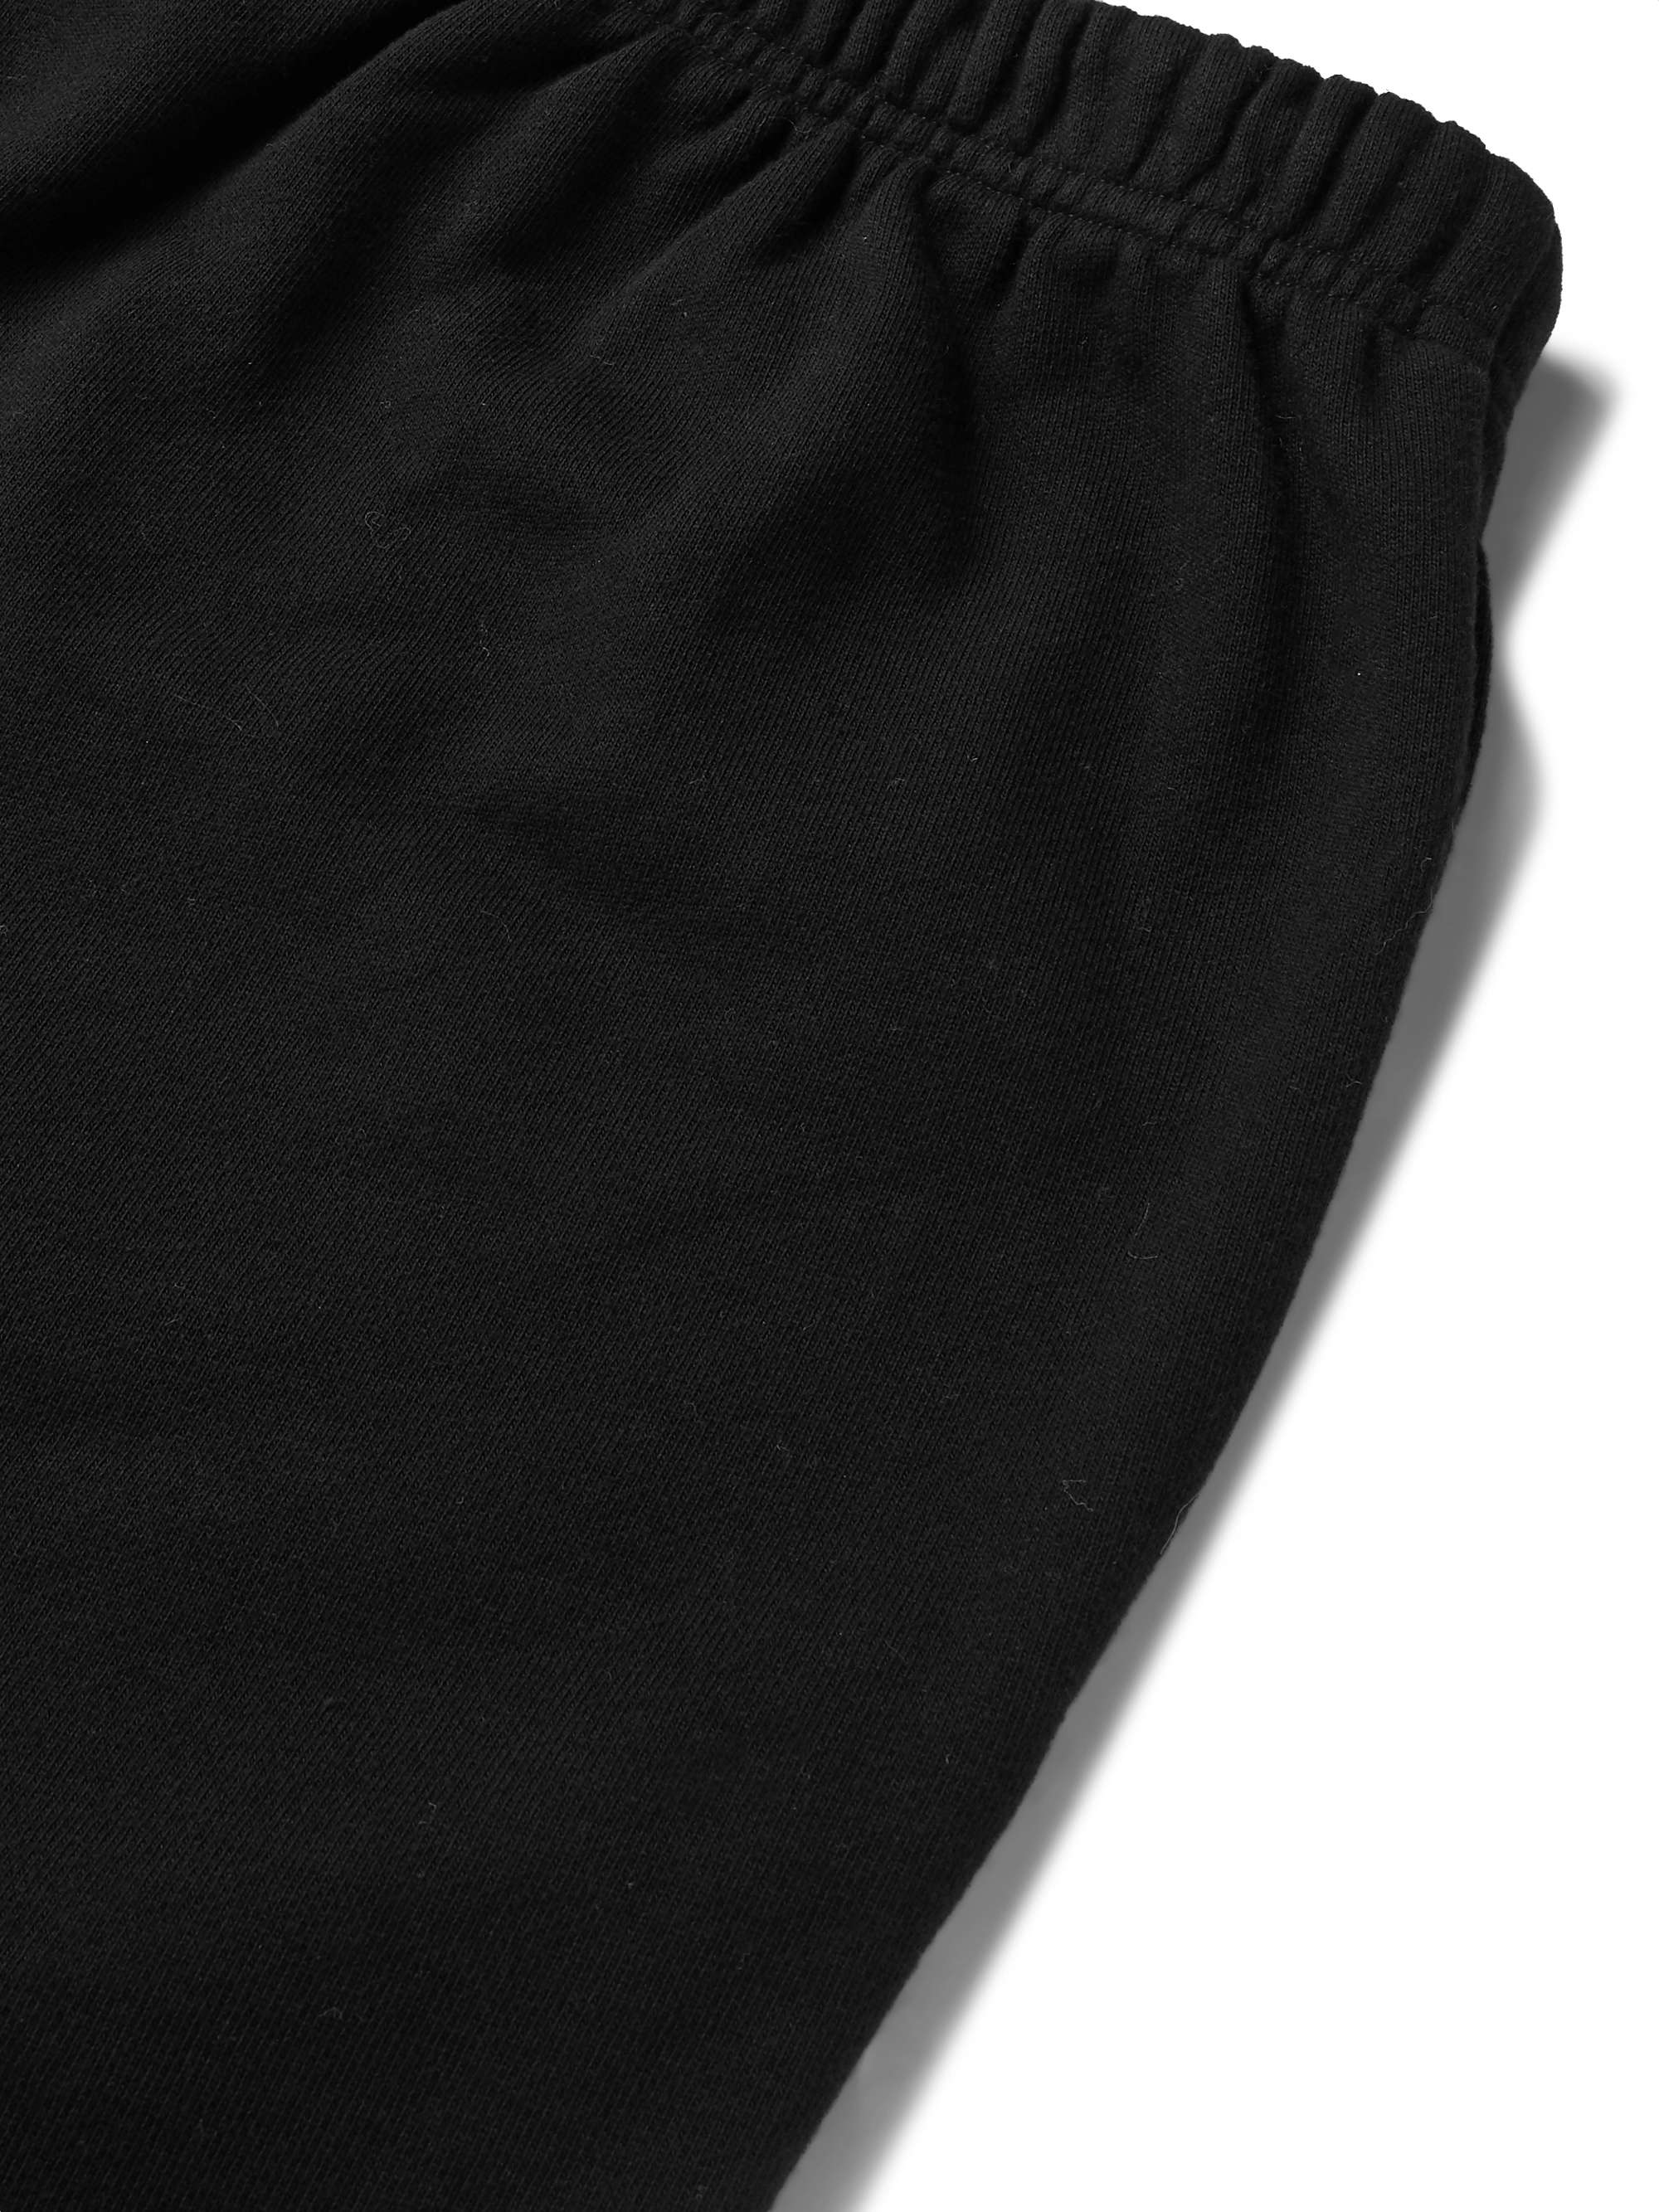 CELINE HOMME Straight-Leg Logo-Embroidered Cotton-Jersey Drawstring Shorts